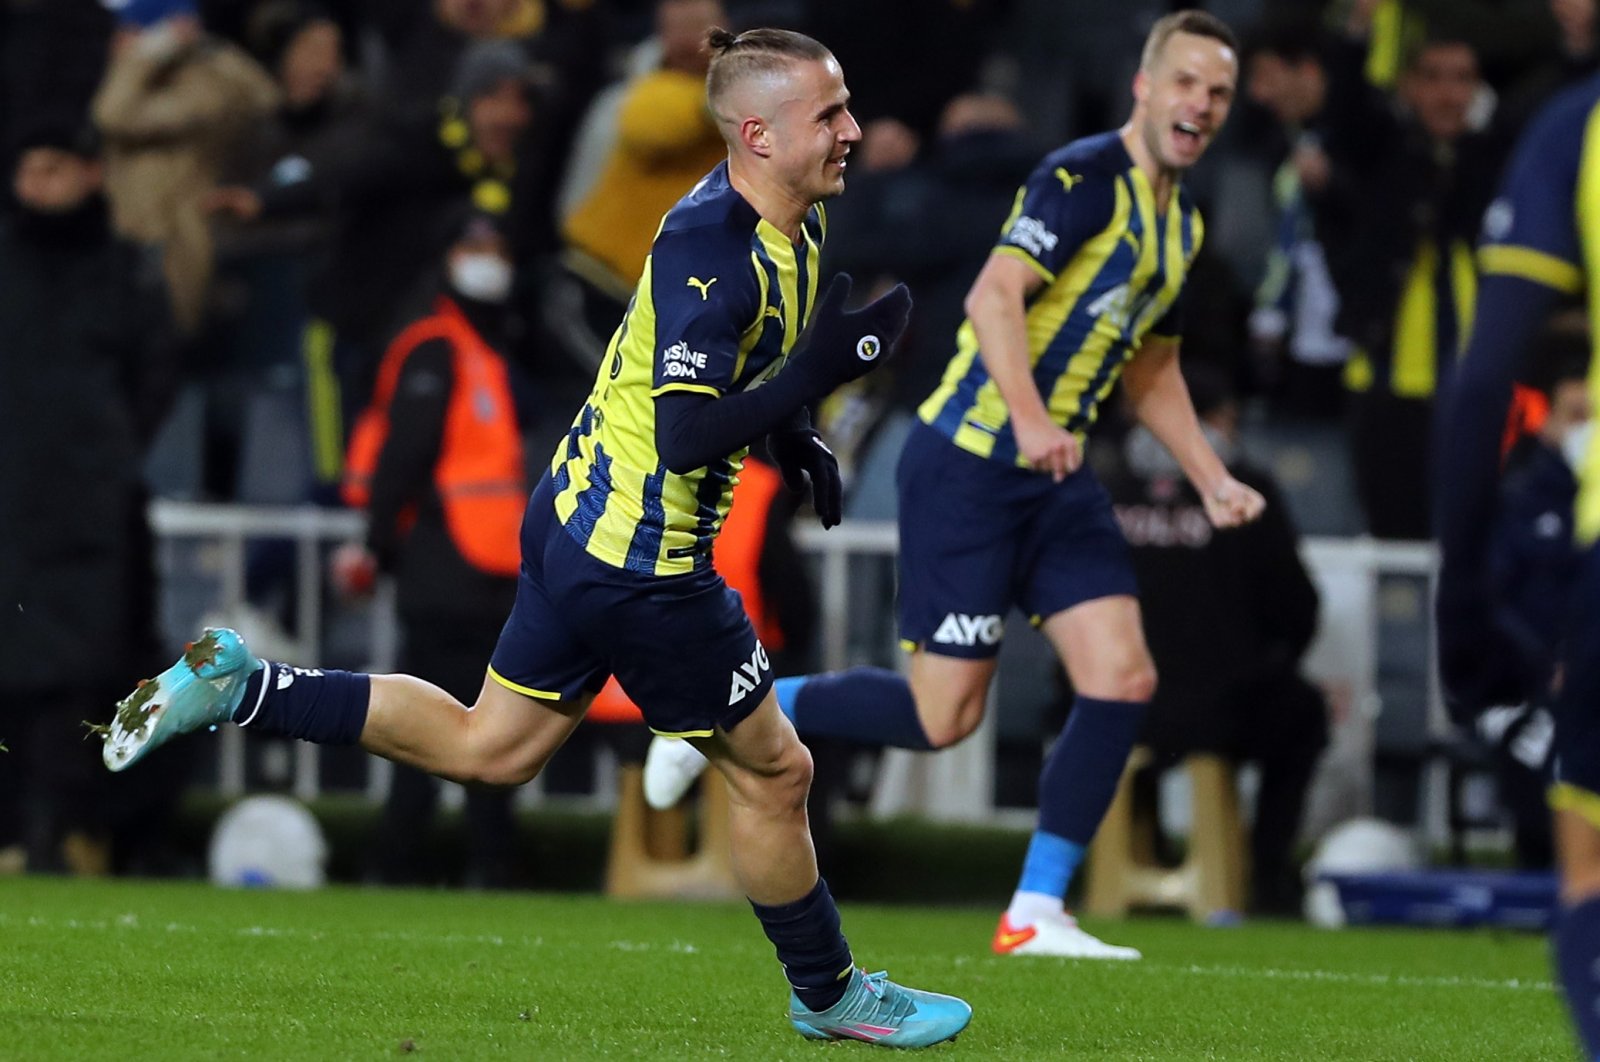 Fenerbahçe&#039;s Dimitris Pelkas celebrates a goal in a Süper Lig match against Konyaspor, Istanbul, Turkey, March 20, 2022. (DHA Photo)